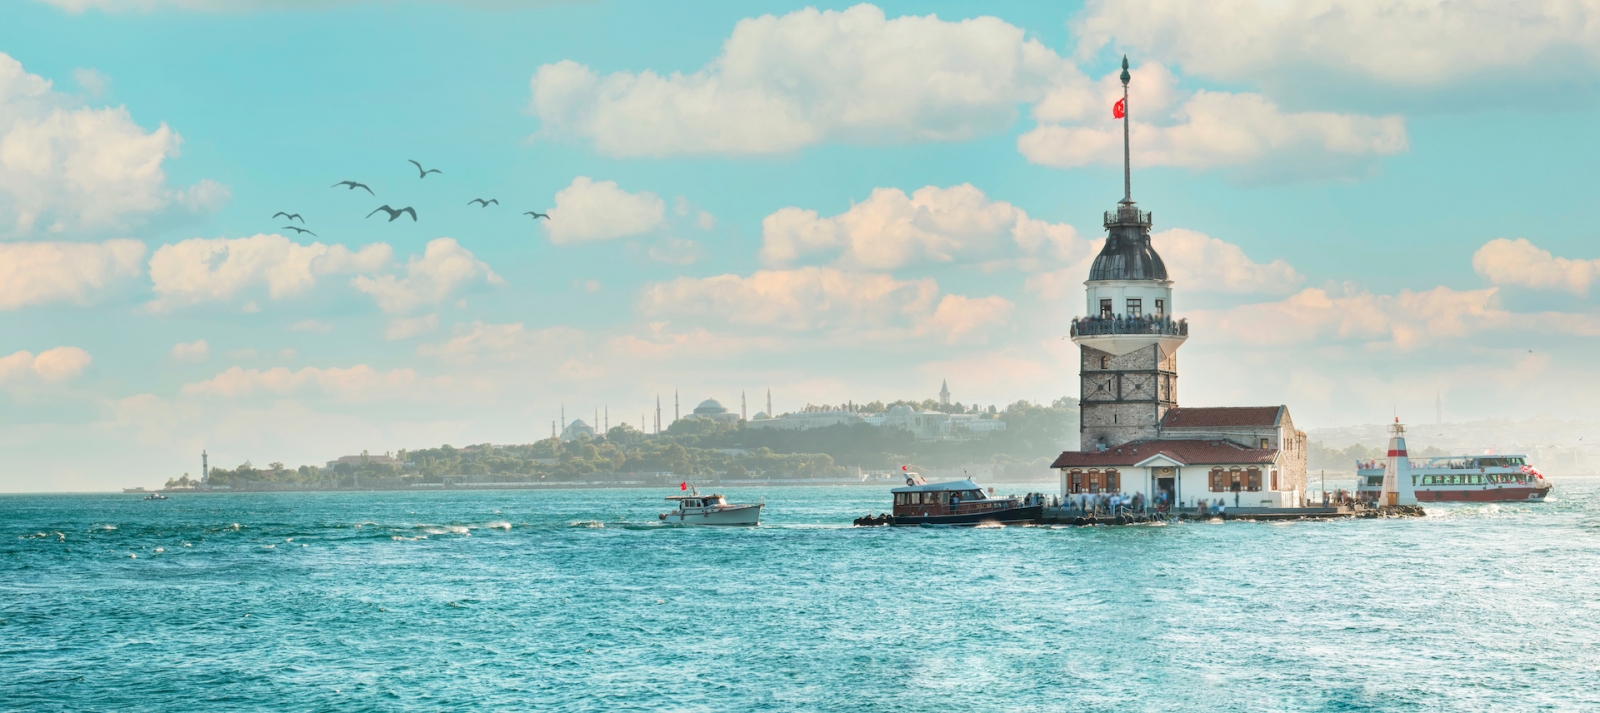 Девичья башня в Стамбуле, Турция (KIZ KULESI - USKUDAR)